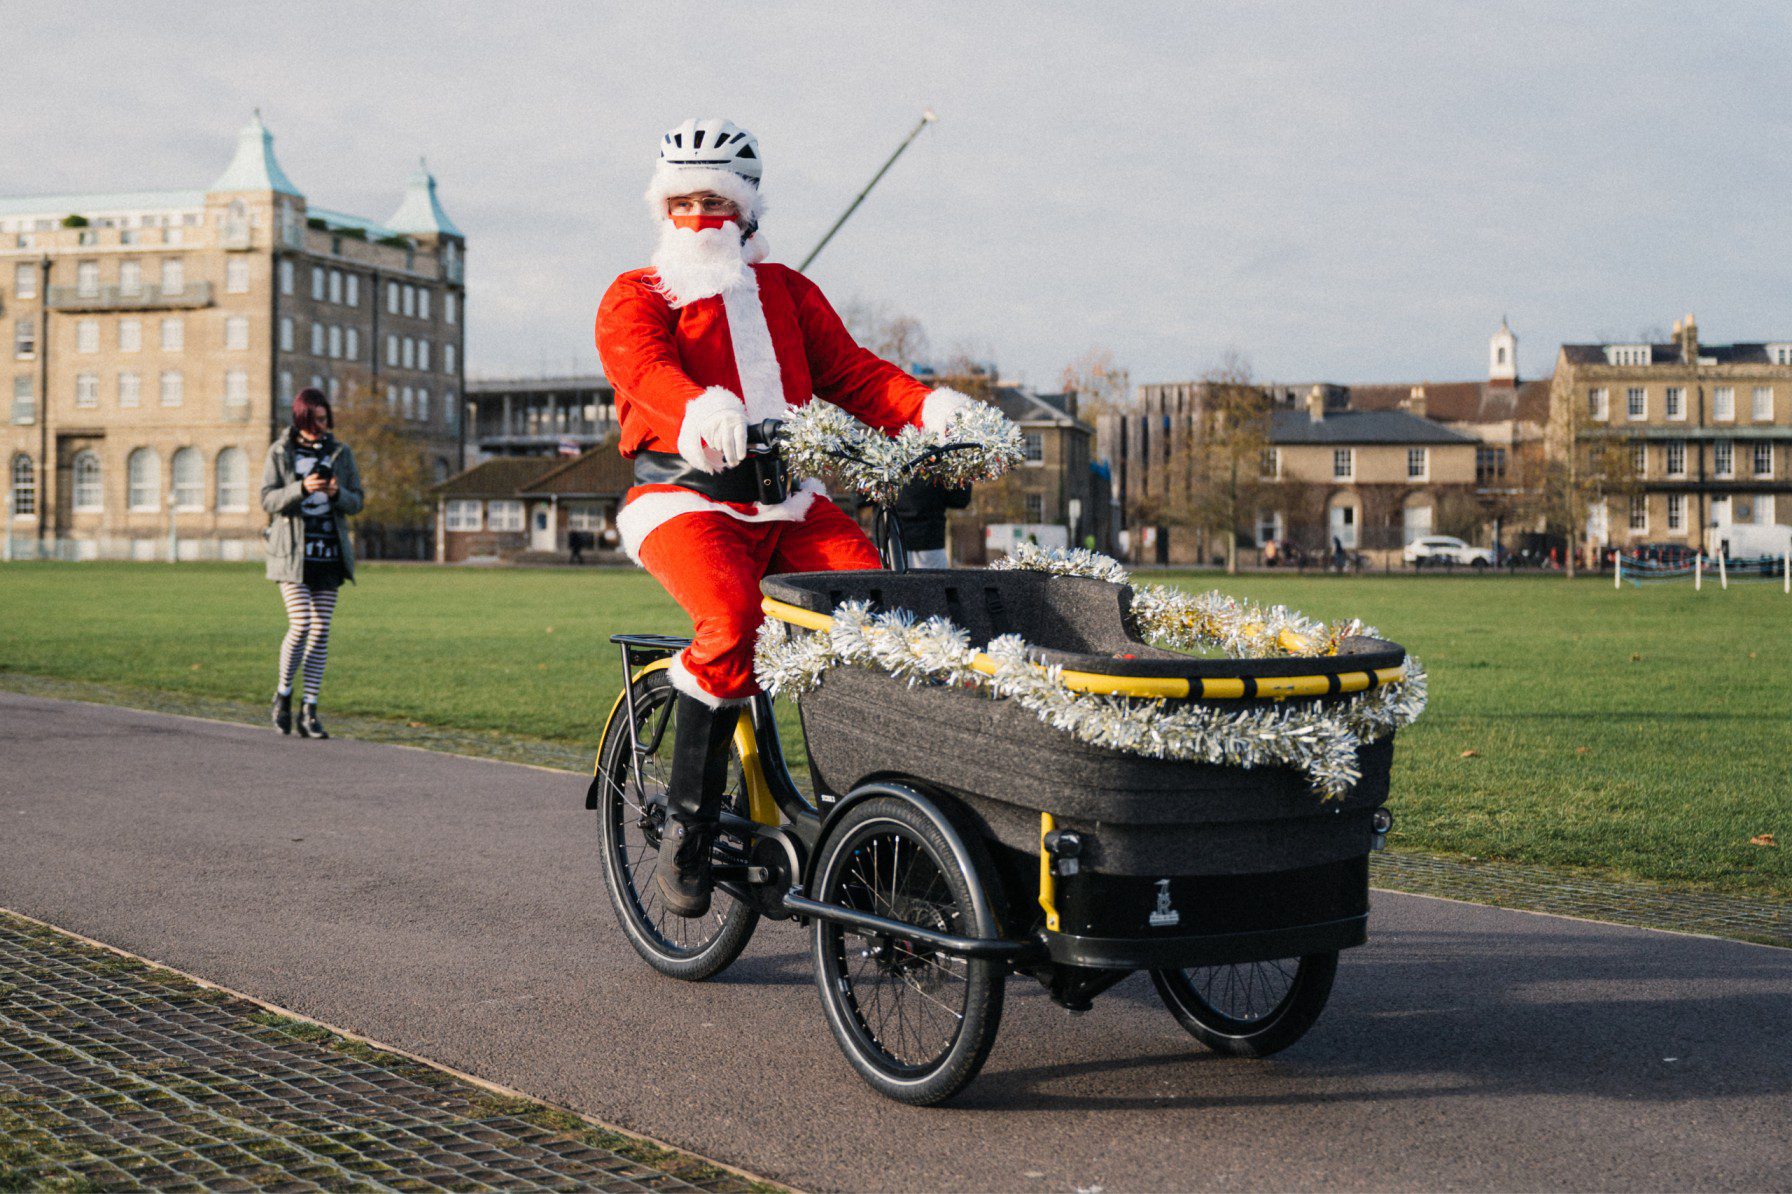 Man dressed as Santa Claus riding a bicycle